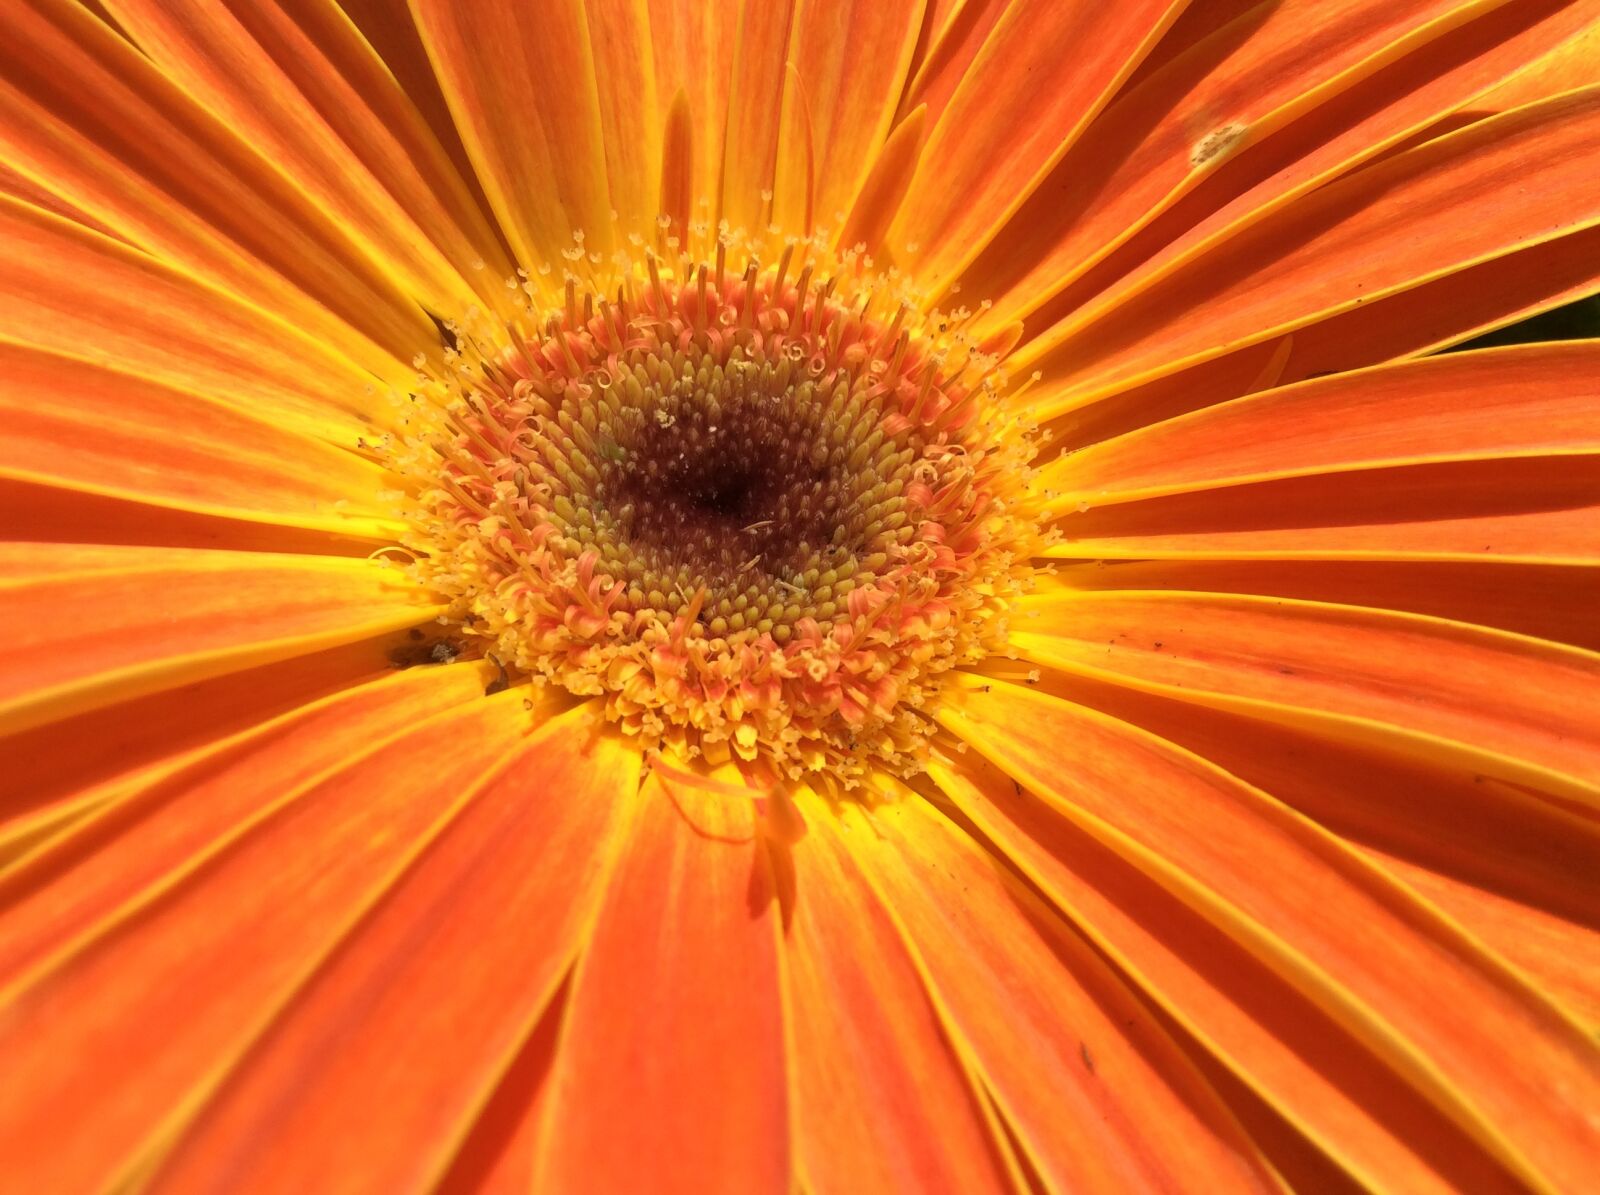 Apple iPad Air + iPad Air back camera 3.3mm f/2.4 sample photo. Flower, daisy, floral photography